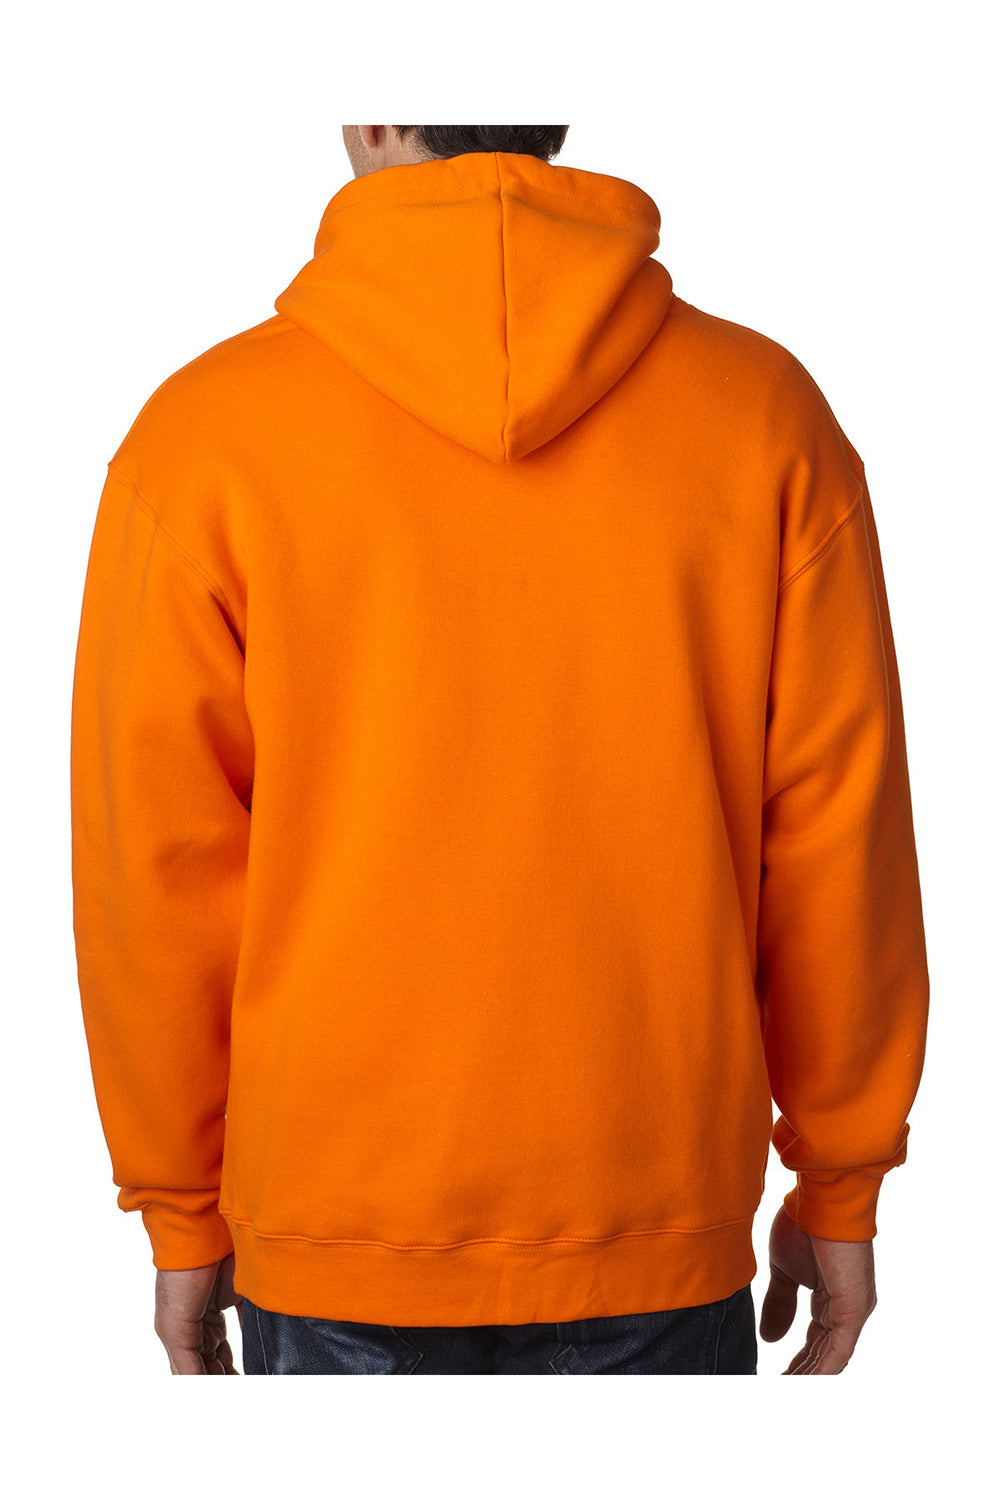 Bayside BA900 Mens USA Made Full Zip Hooded Sweatshirt Hoodie Bright Orange Model Back